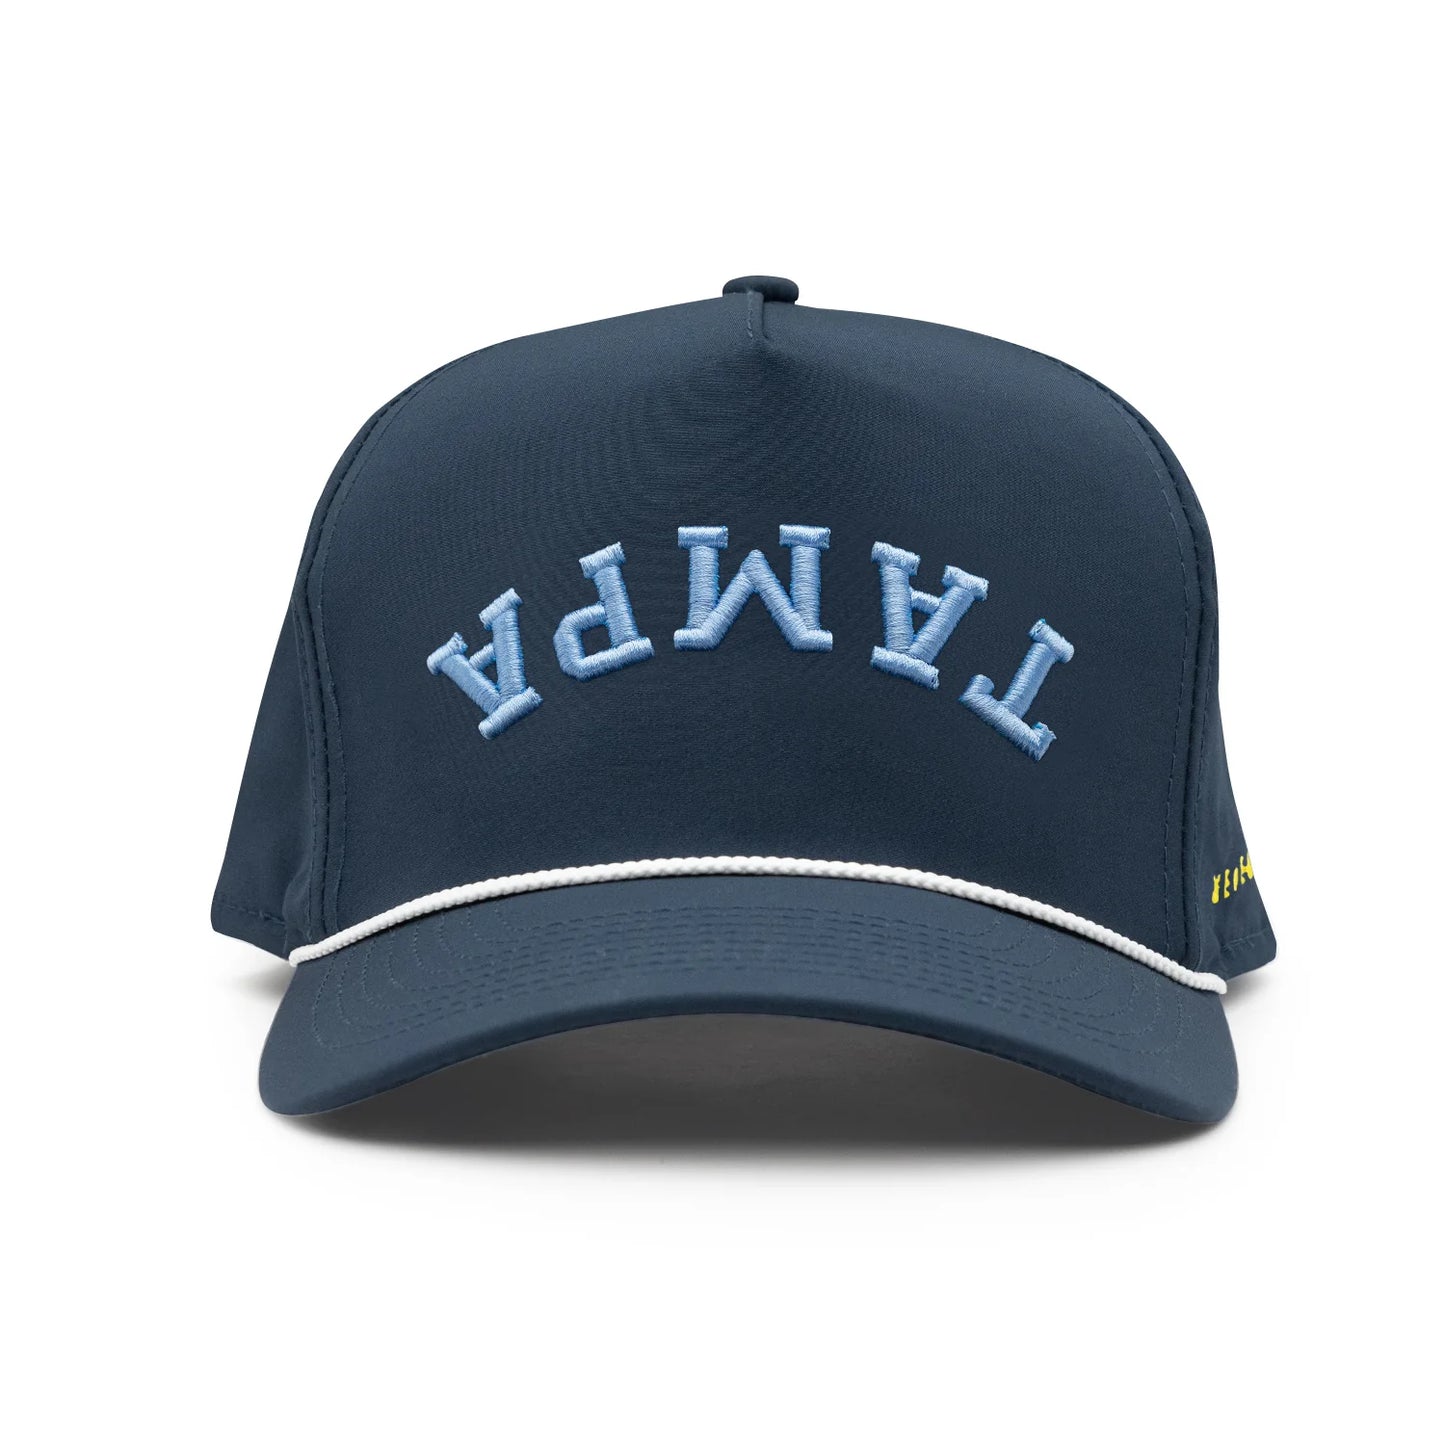 Tampa Rays Hat - Reversed Brand